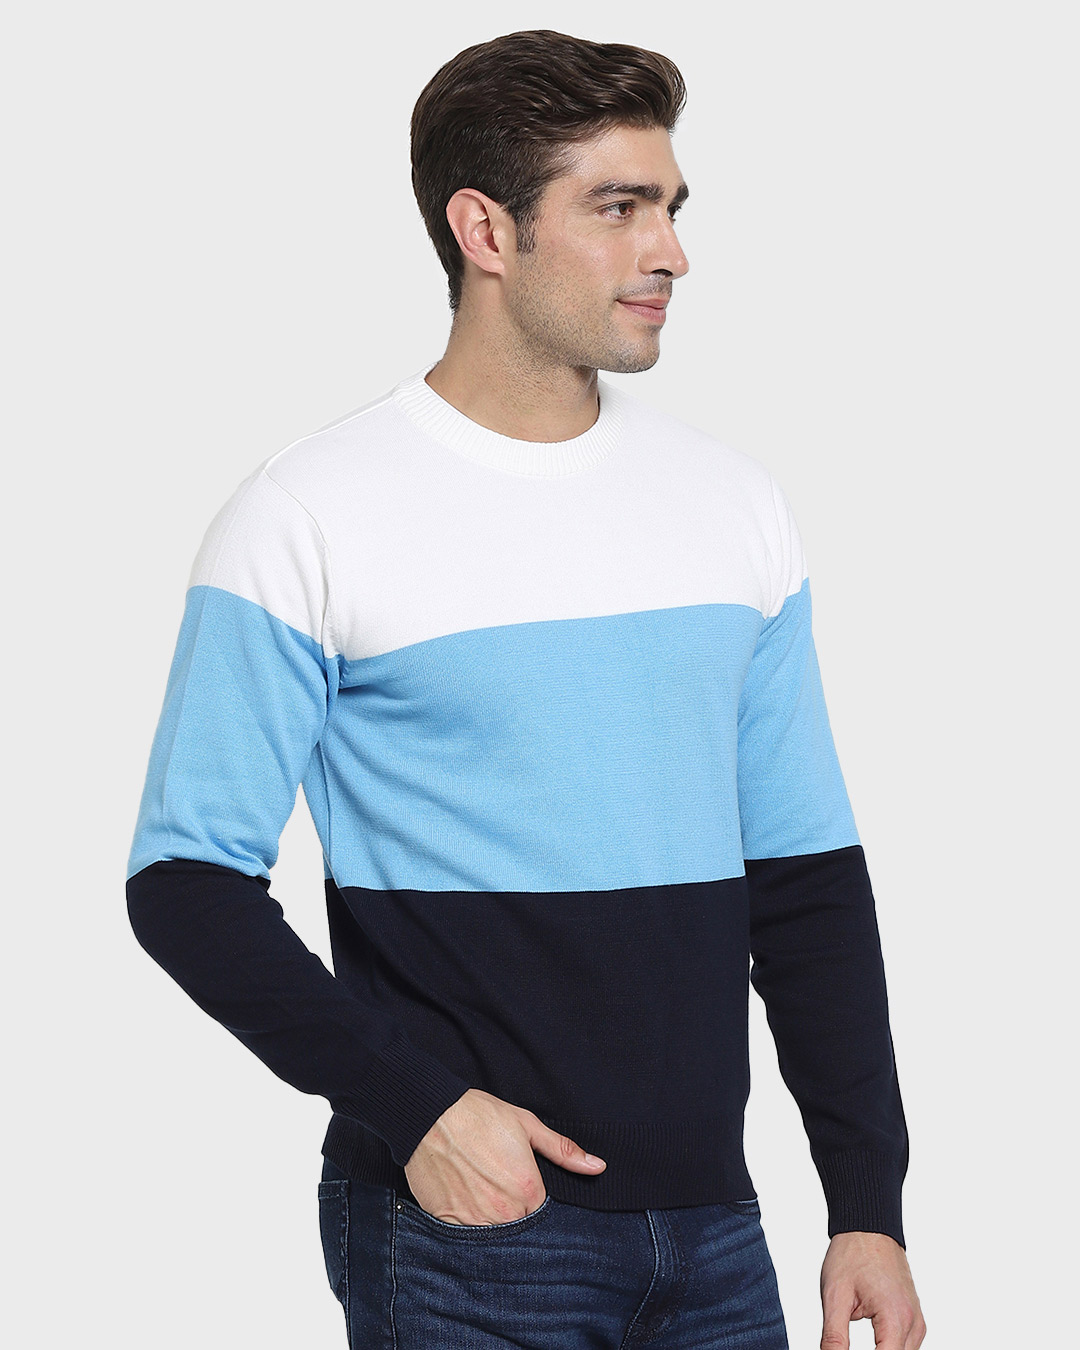 Men’s Blue & White Color Block Flat Knit Sweater